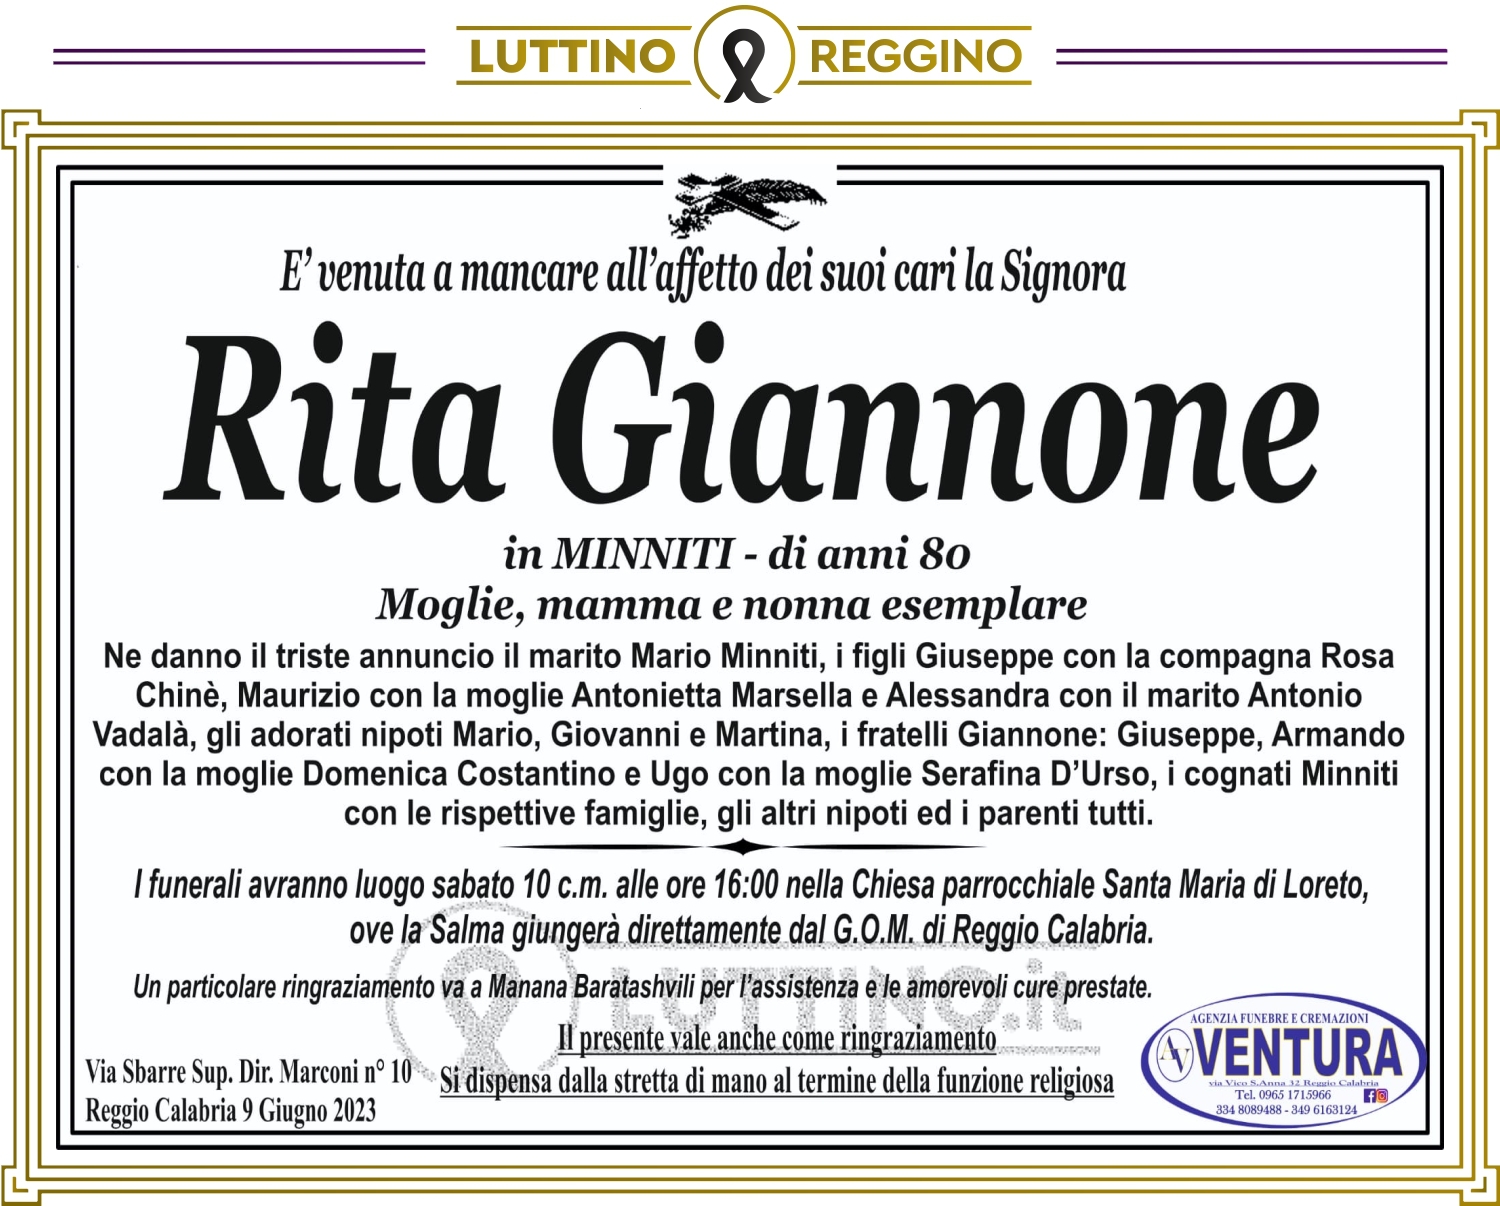 Rita Giannone